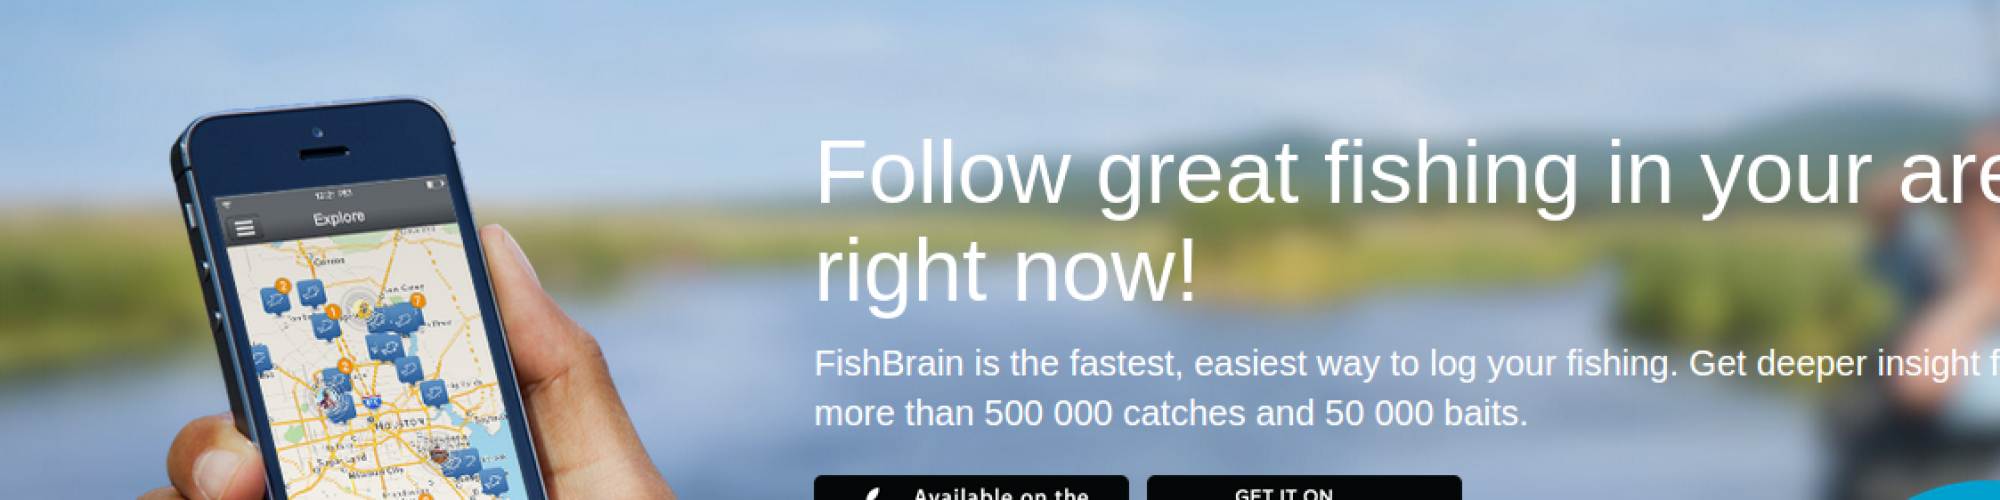 apps like fishbrain